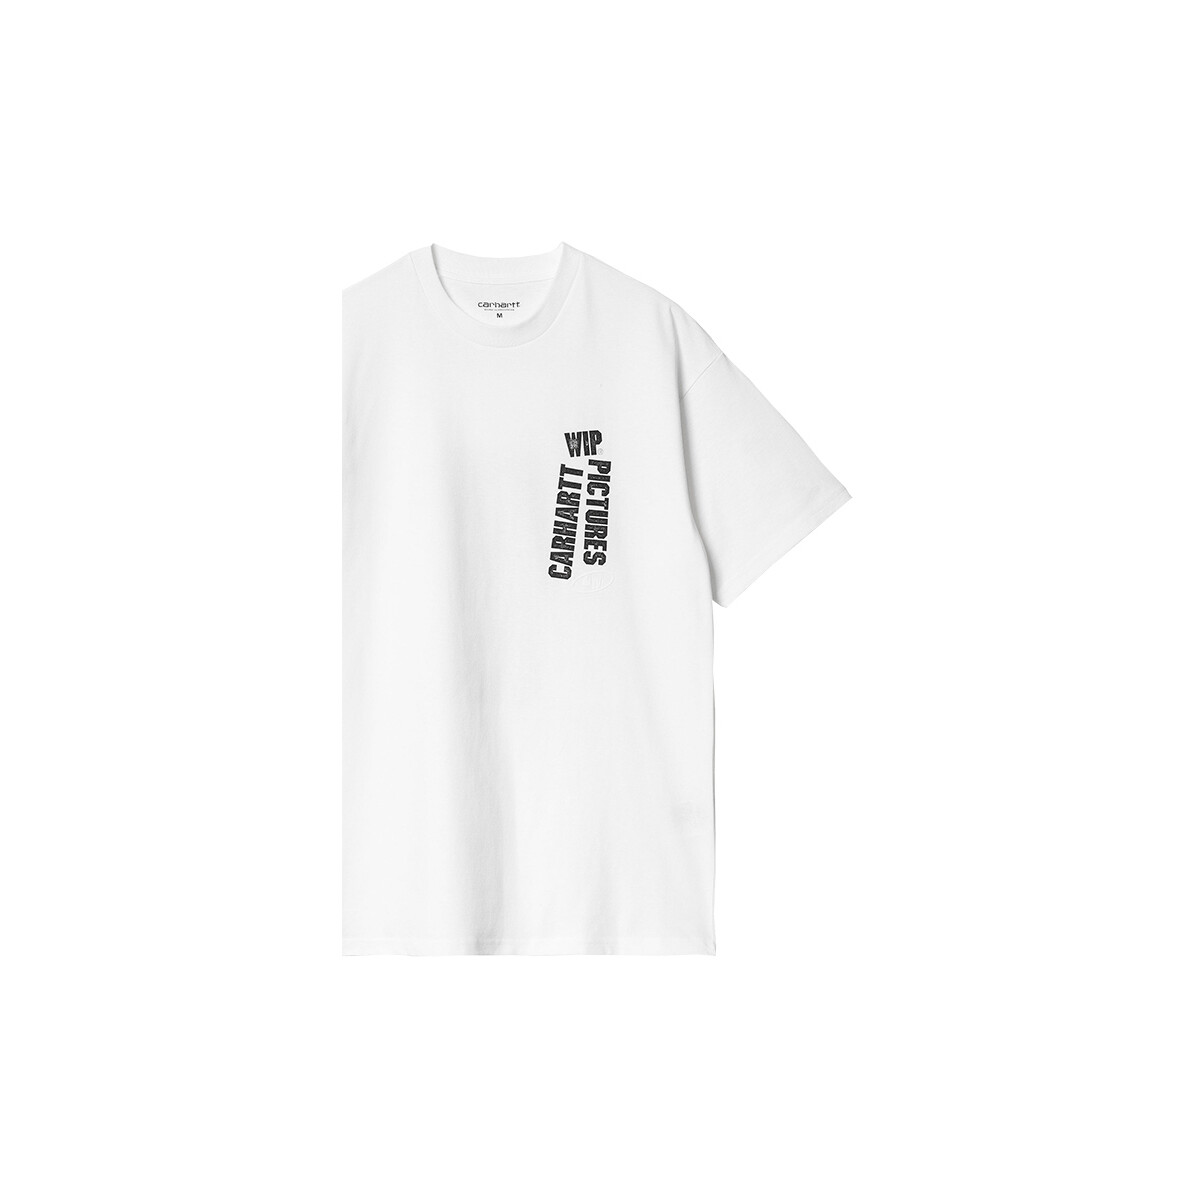 textil Camisetas manga corta Carhartt WIP S/S WIP PICT Blanco